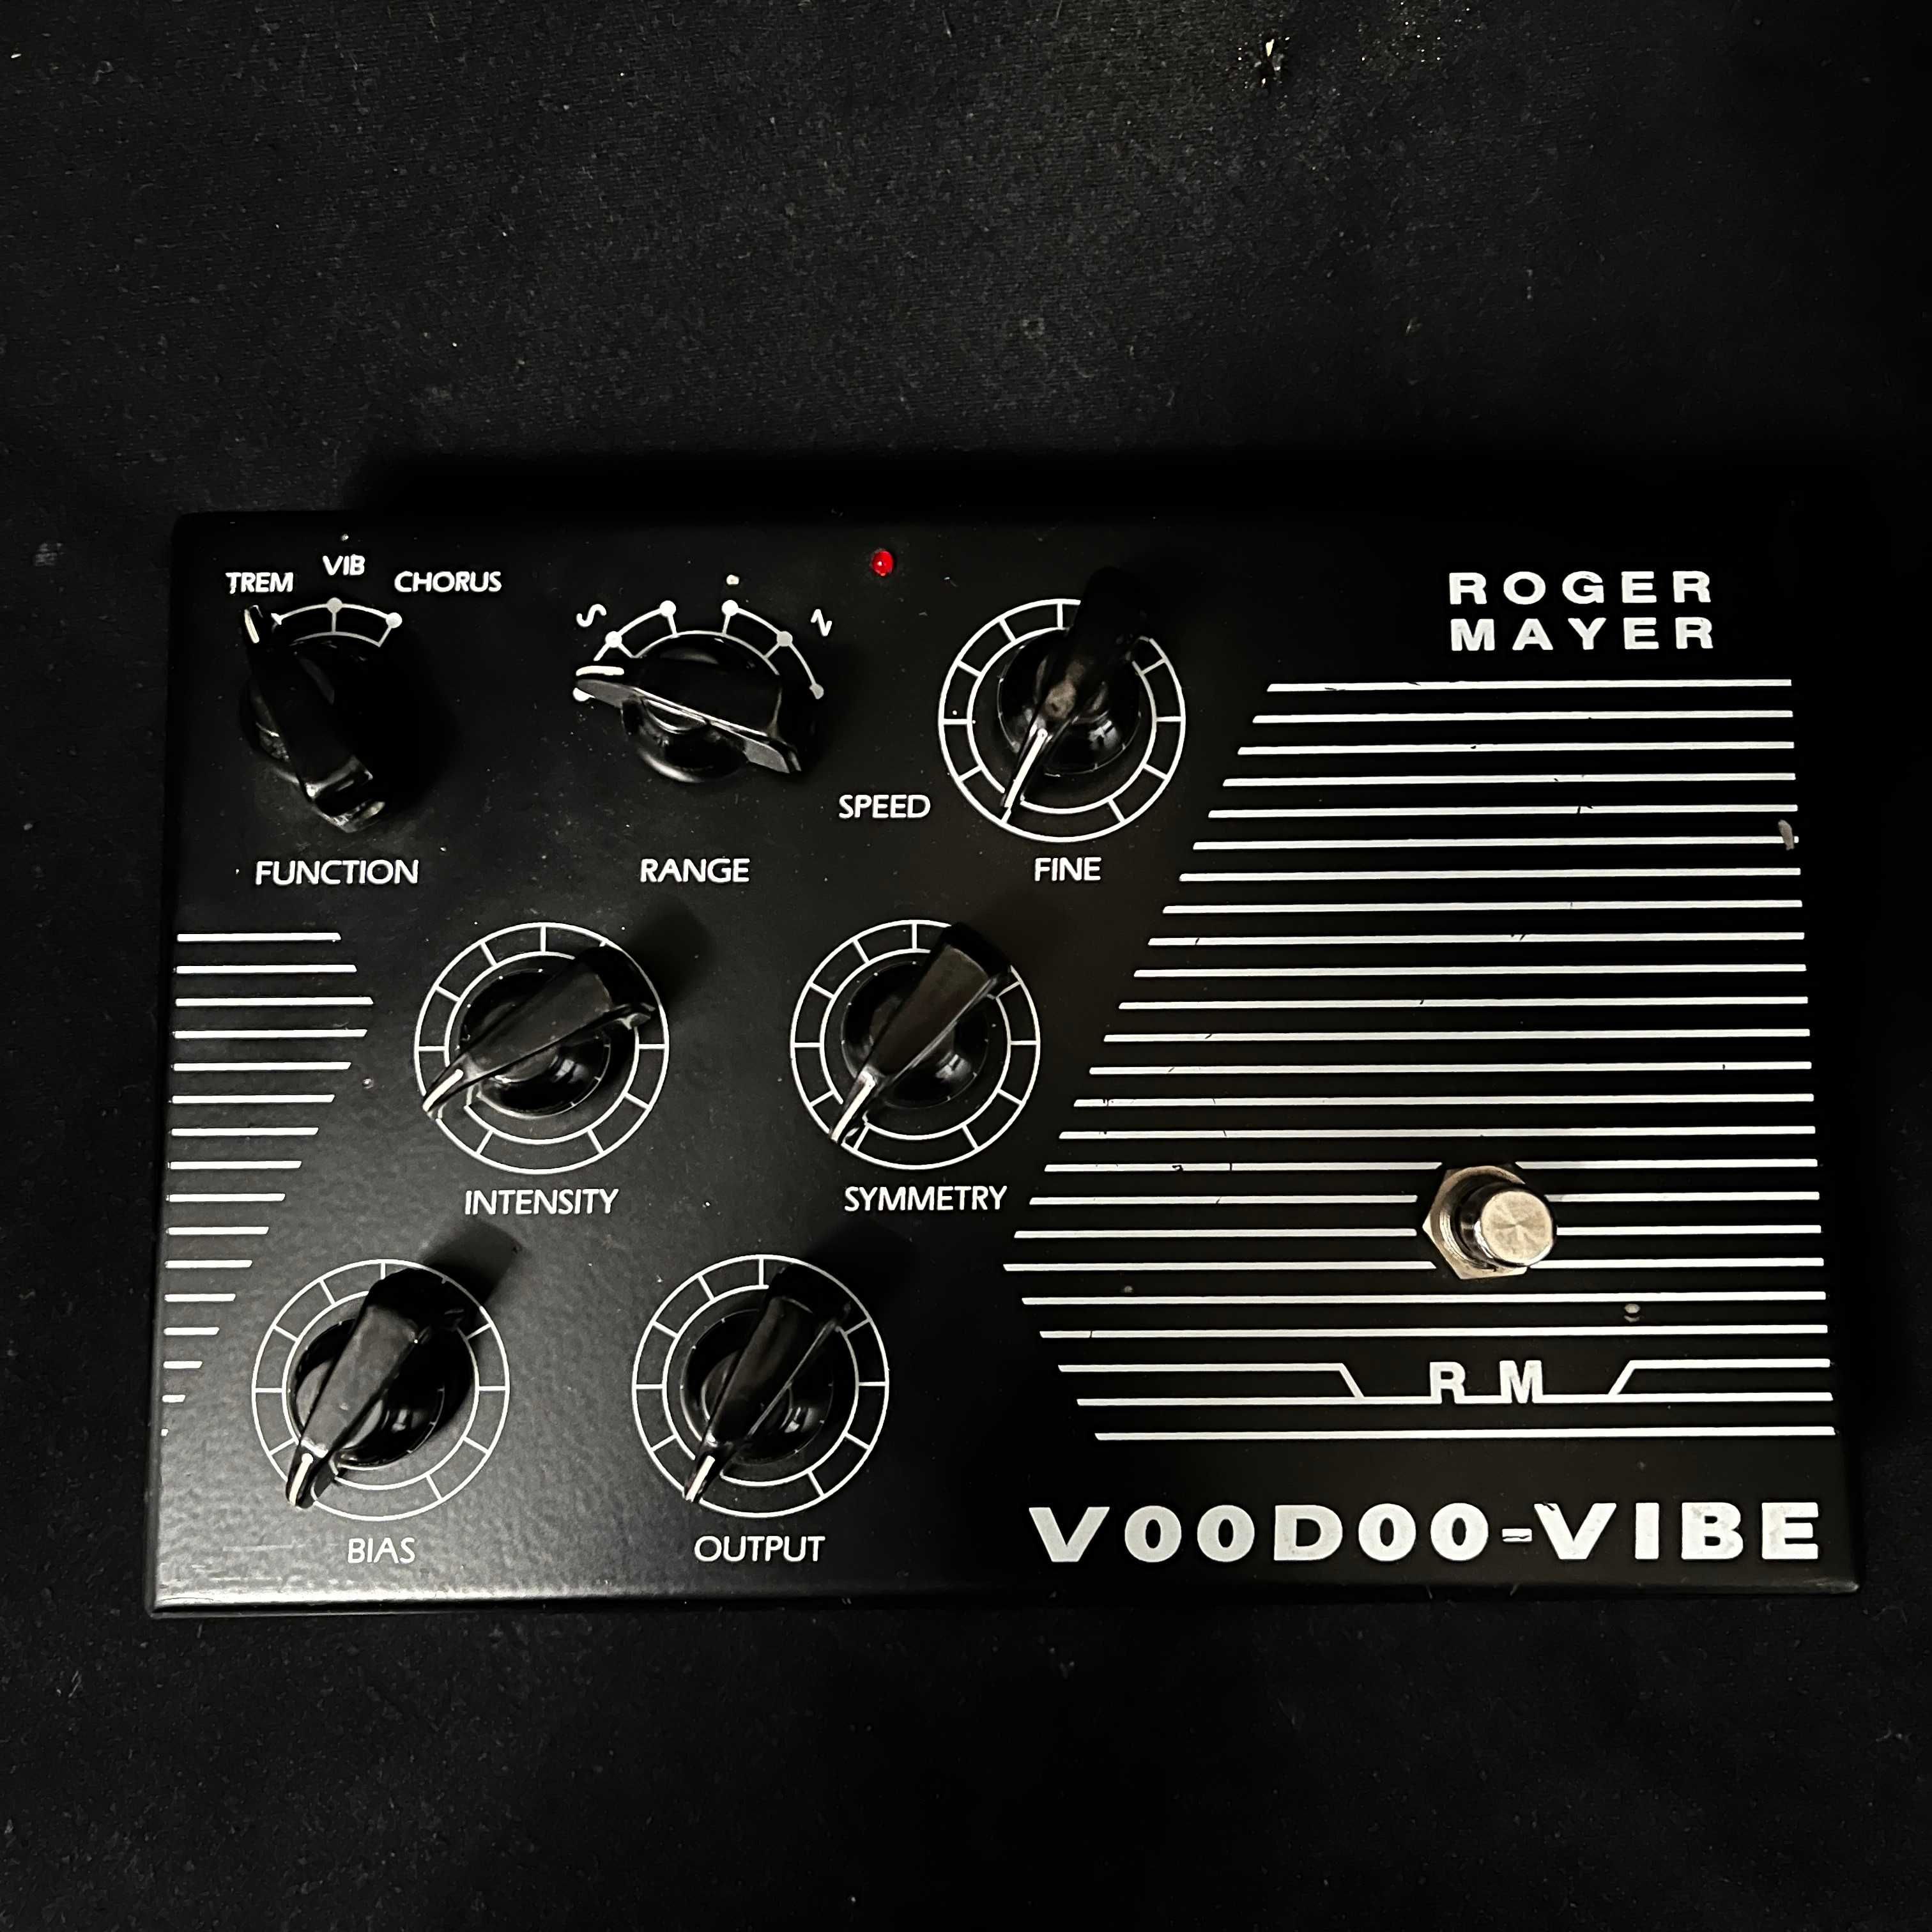 Roger Mayer - Voodoo Vibe - była własność gitarzysty zespołu Breakout